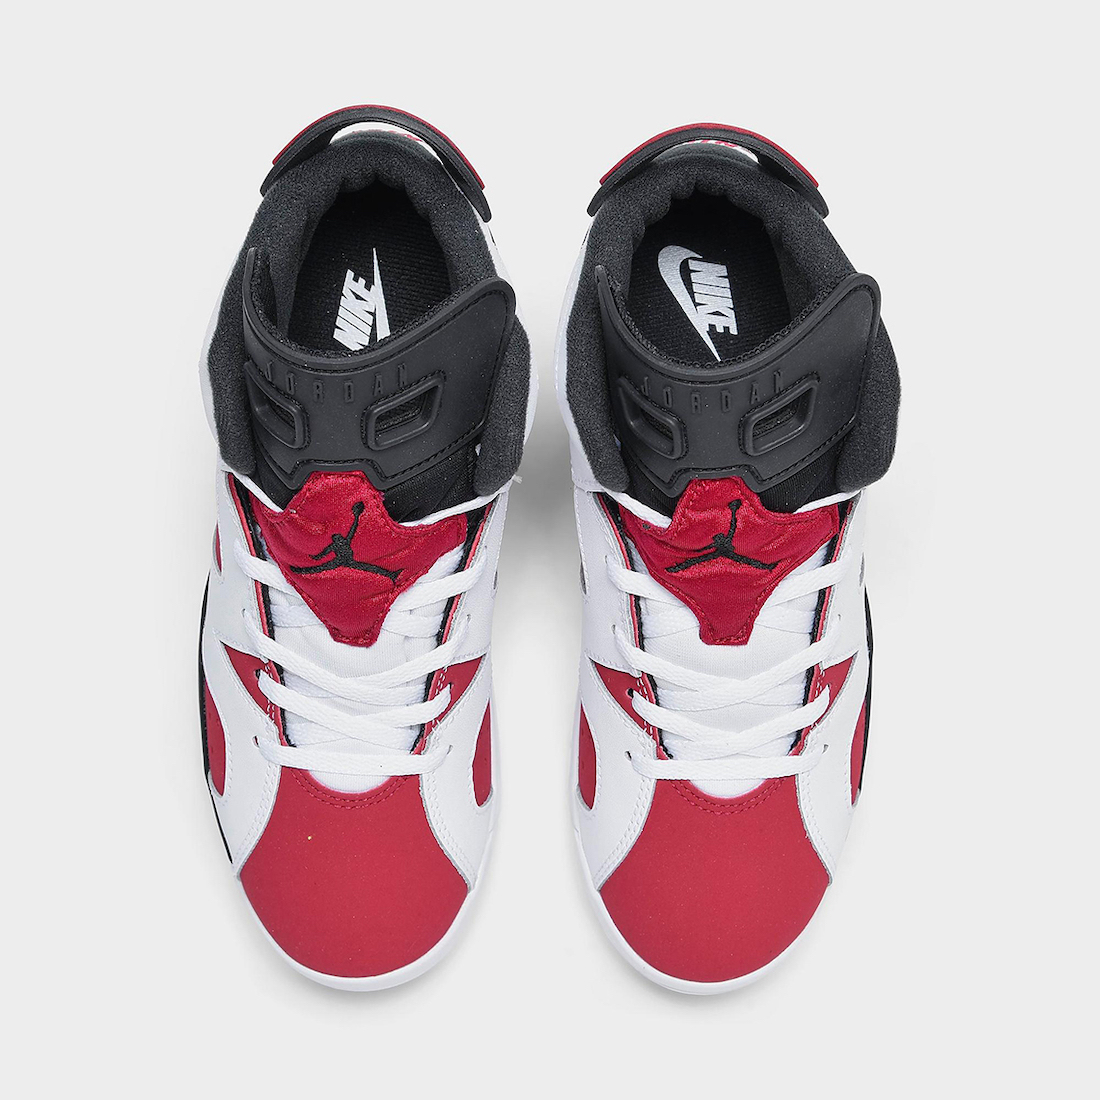 Nike Air, NIKE, Jordan Brand, Jordan, Carmine, Air Jordan 6“ Carmine”, Air Jordan 6, Air Jordan